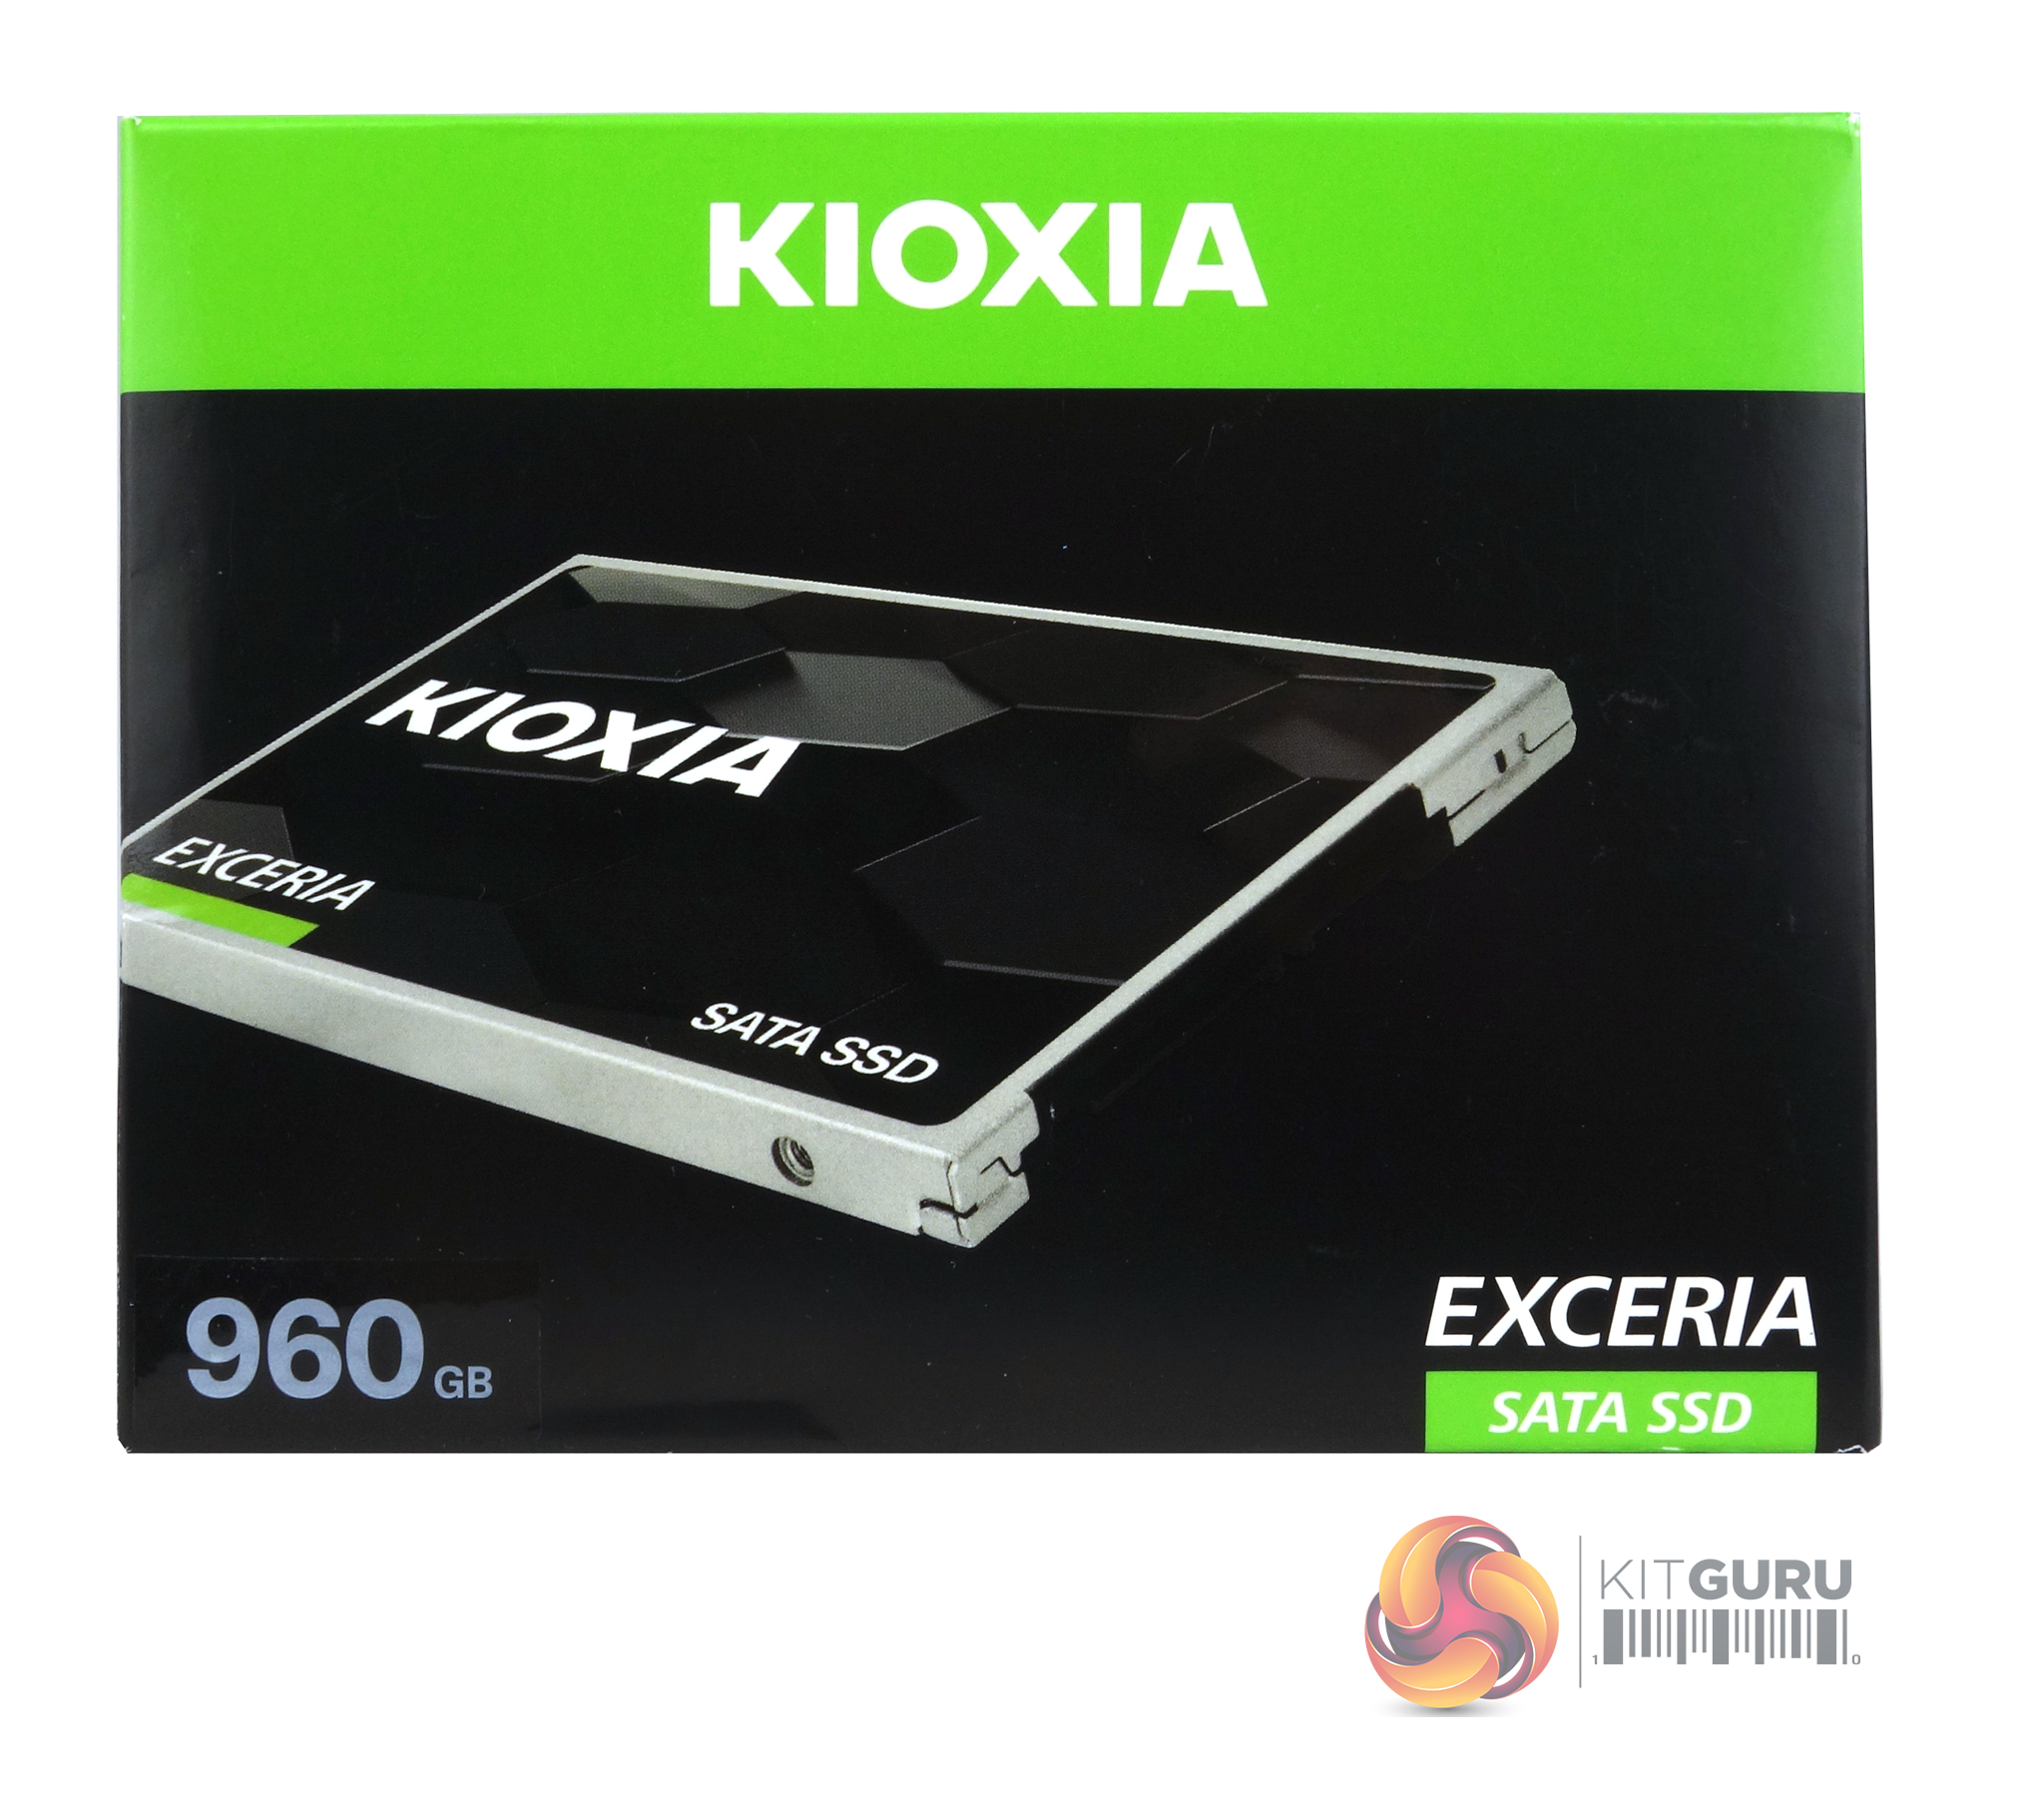 Kioxia Exceria 960GB SSD Review KitGuru, 53% OFF